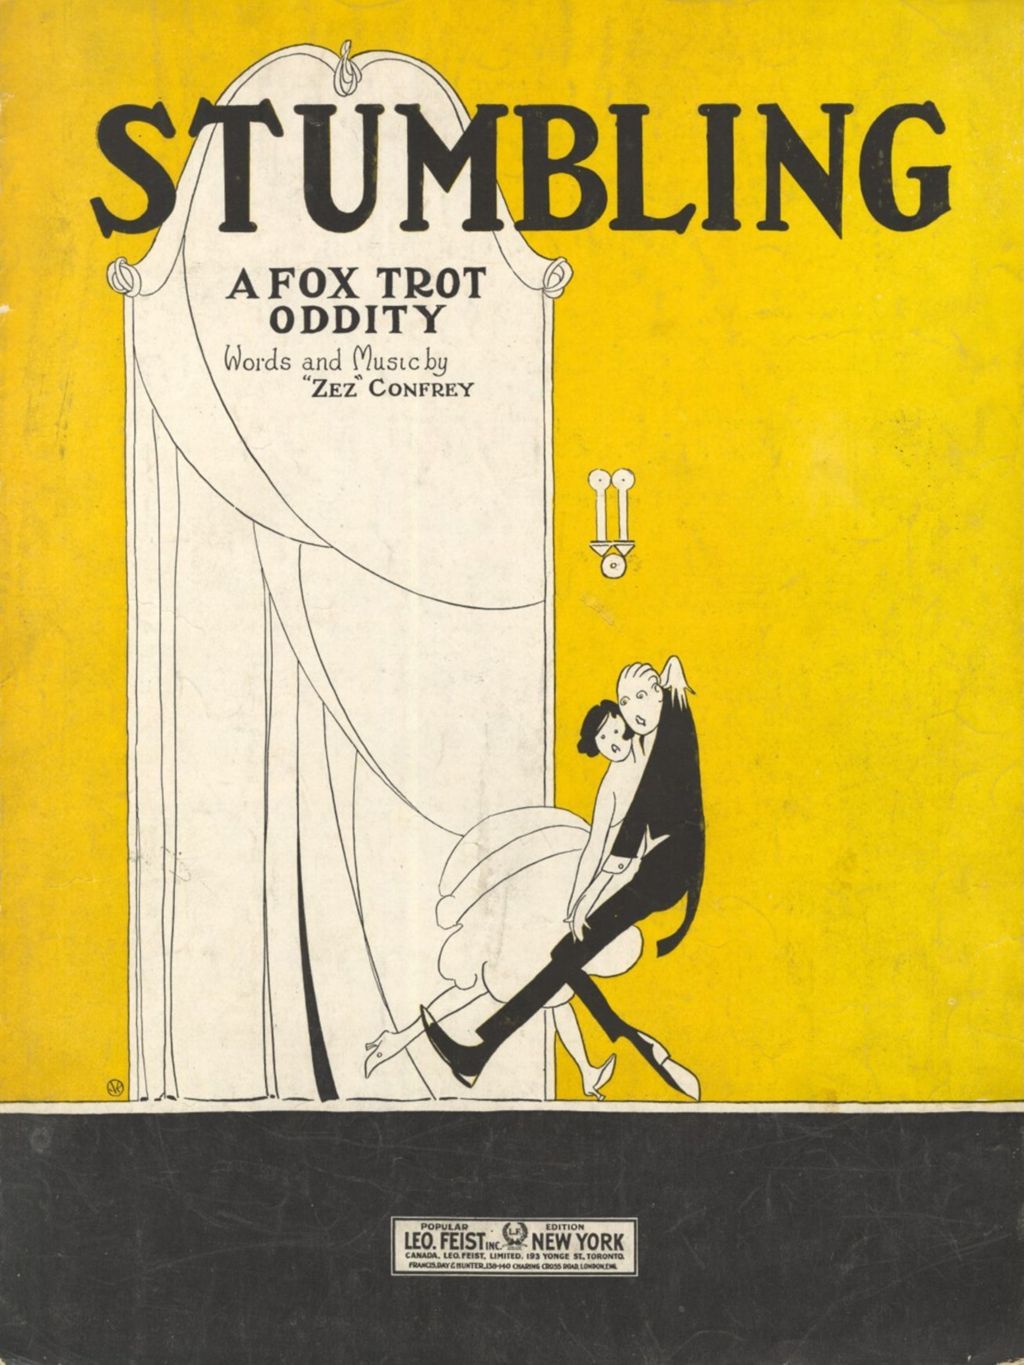 Miniature of Stumbling